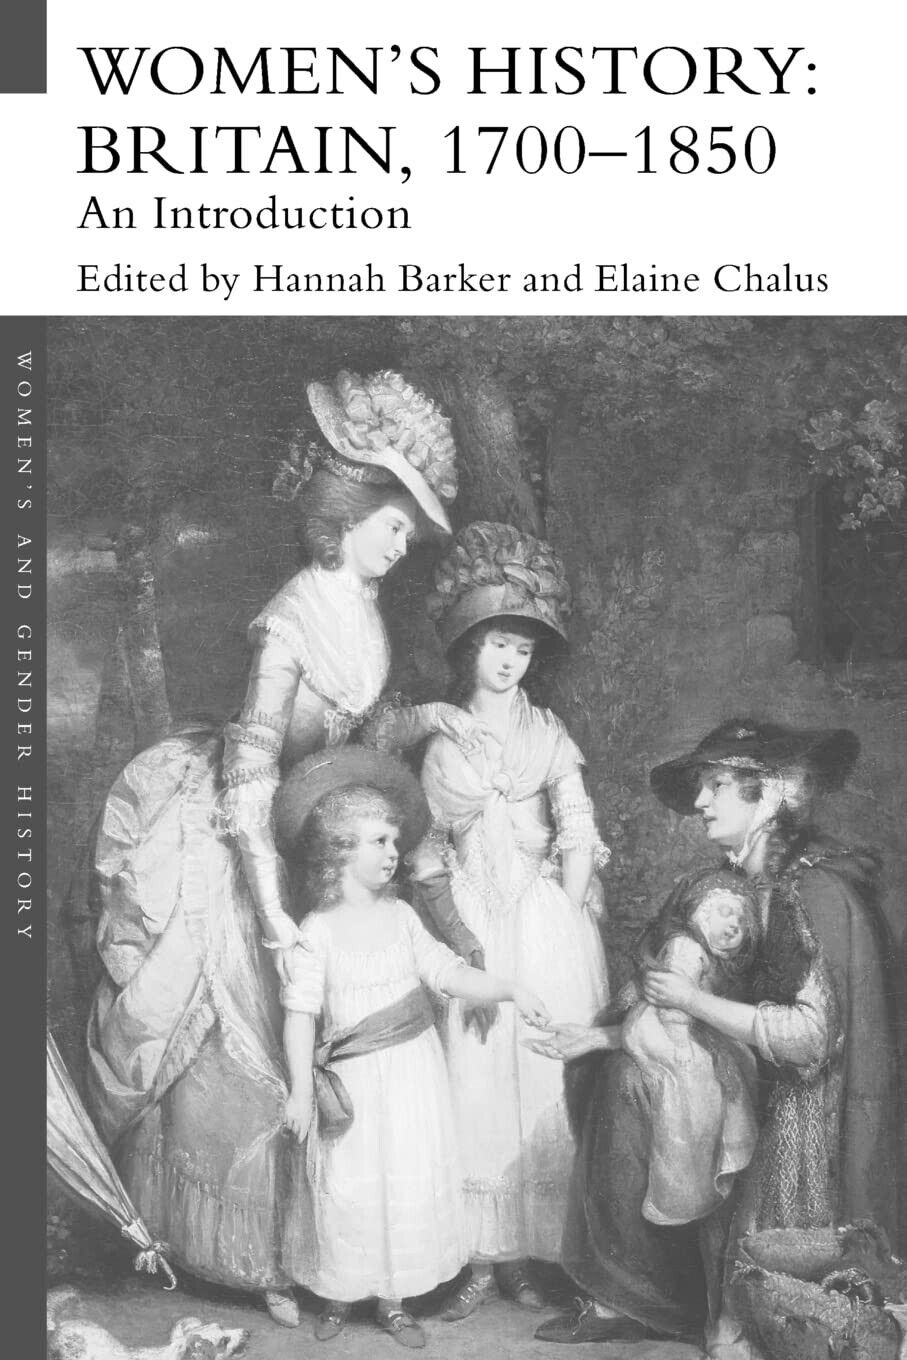 Women s History, Britain 1700-1850 - Hannah Barker - Routledge, 2005